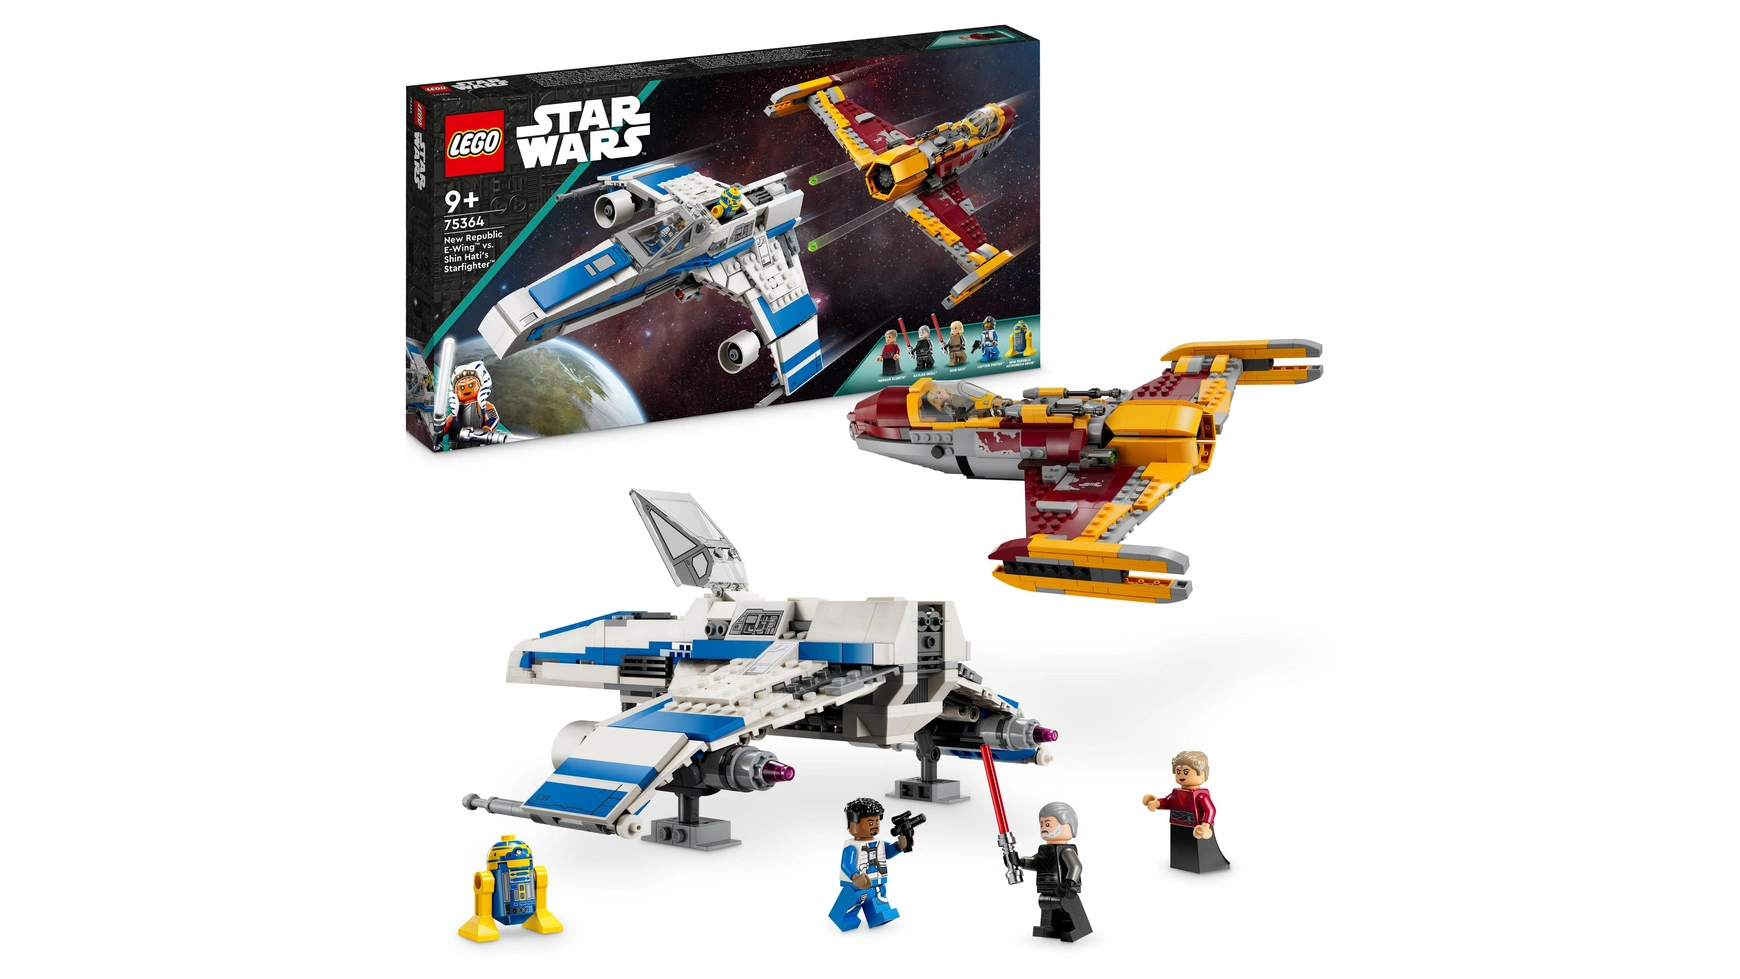 Lego Star Wars E-Wing Новой Республики против звездного истребителя Шин Хати lego star wars 75364 new republic e wing vs shin hati’s starfighter 1056 дет